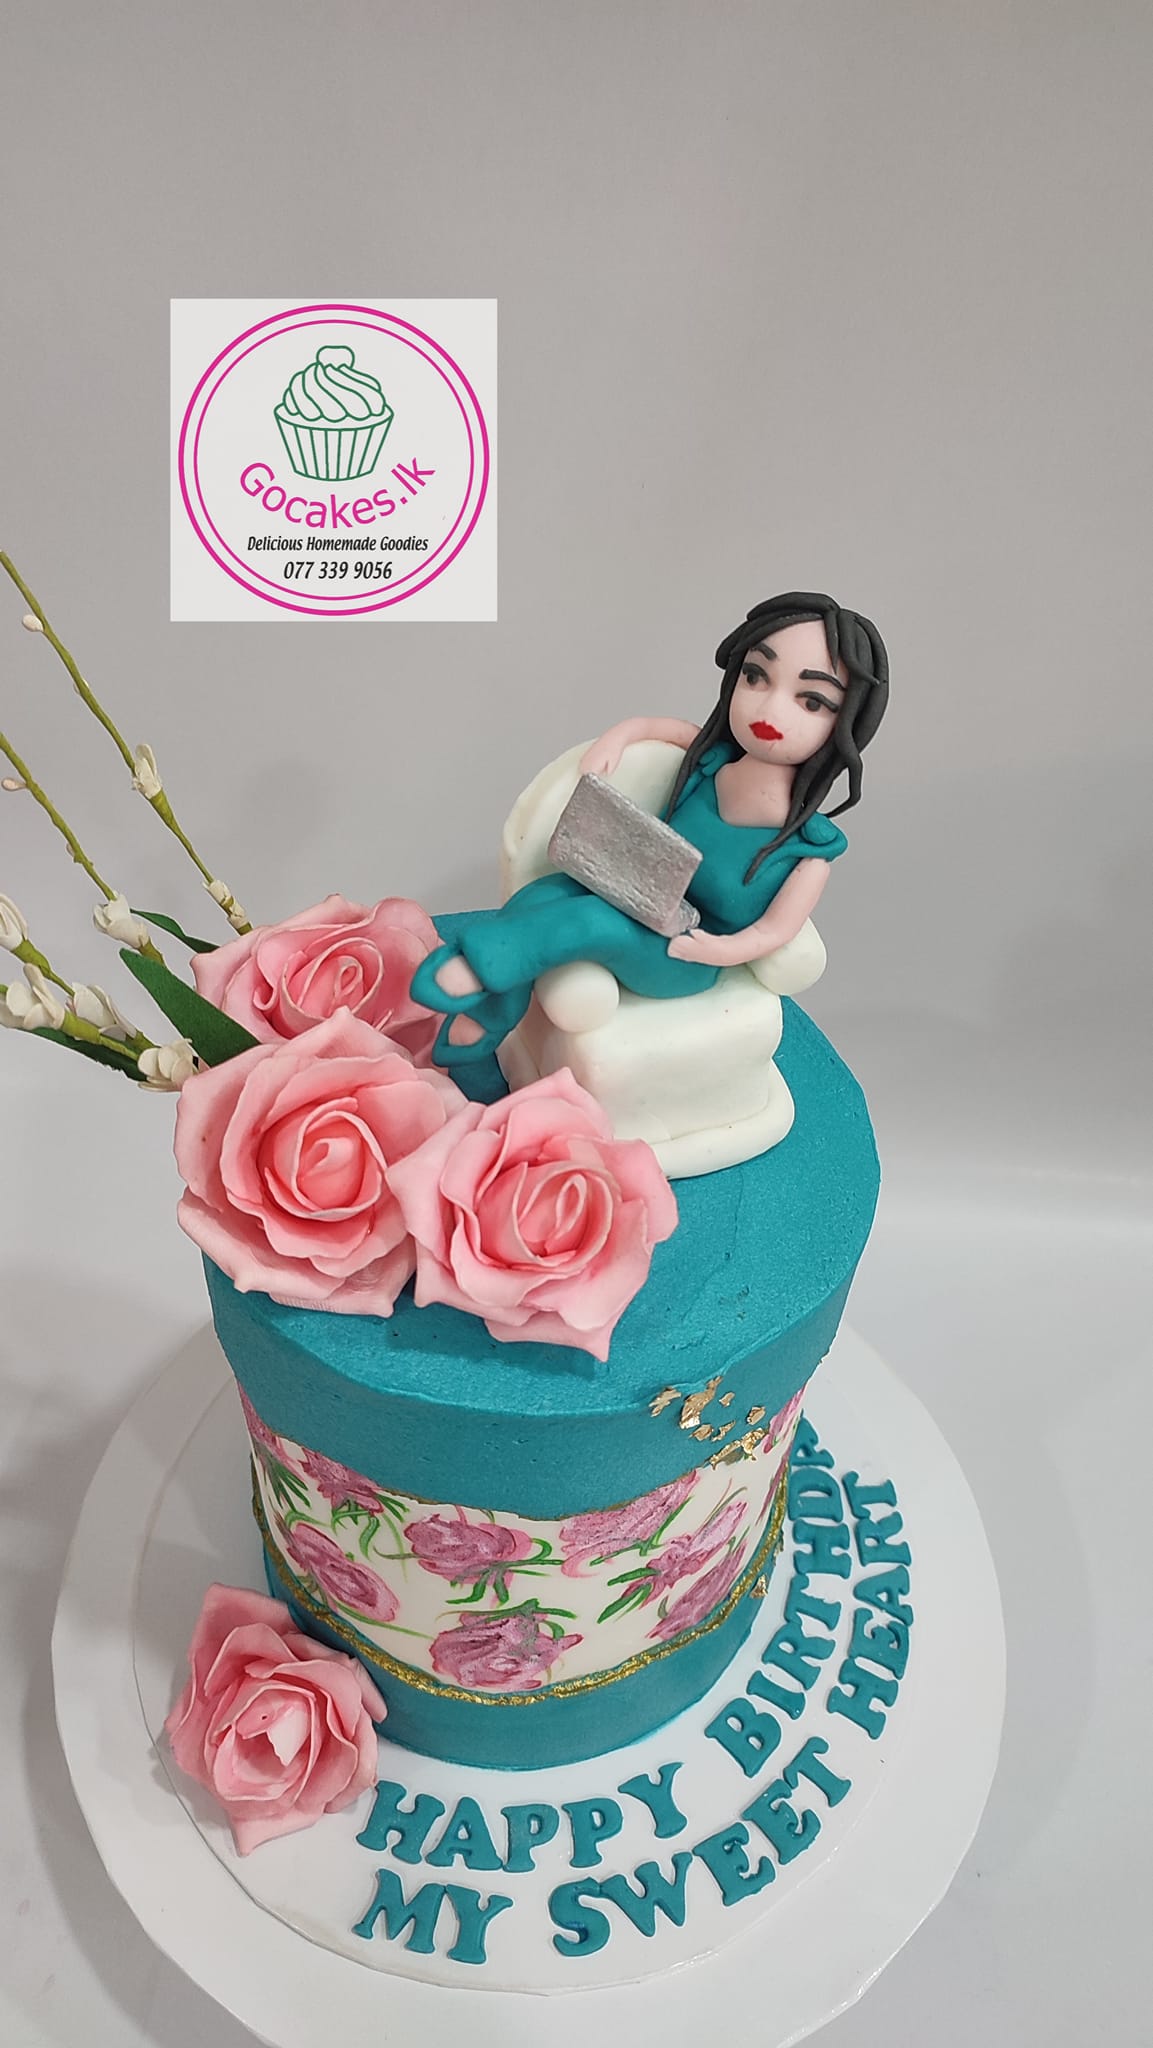 Wife Birthday Cake - Cake in Lahore By Bakisto - the cake company